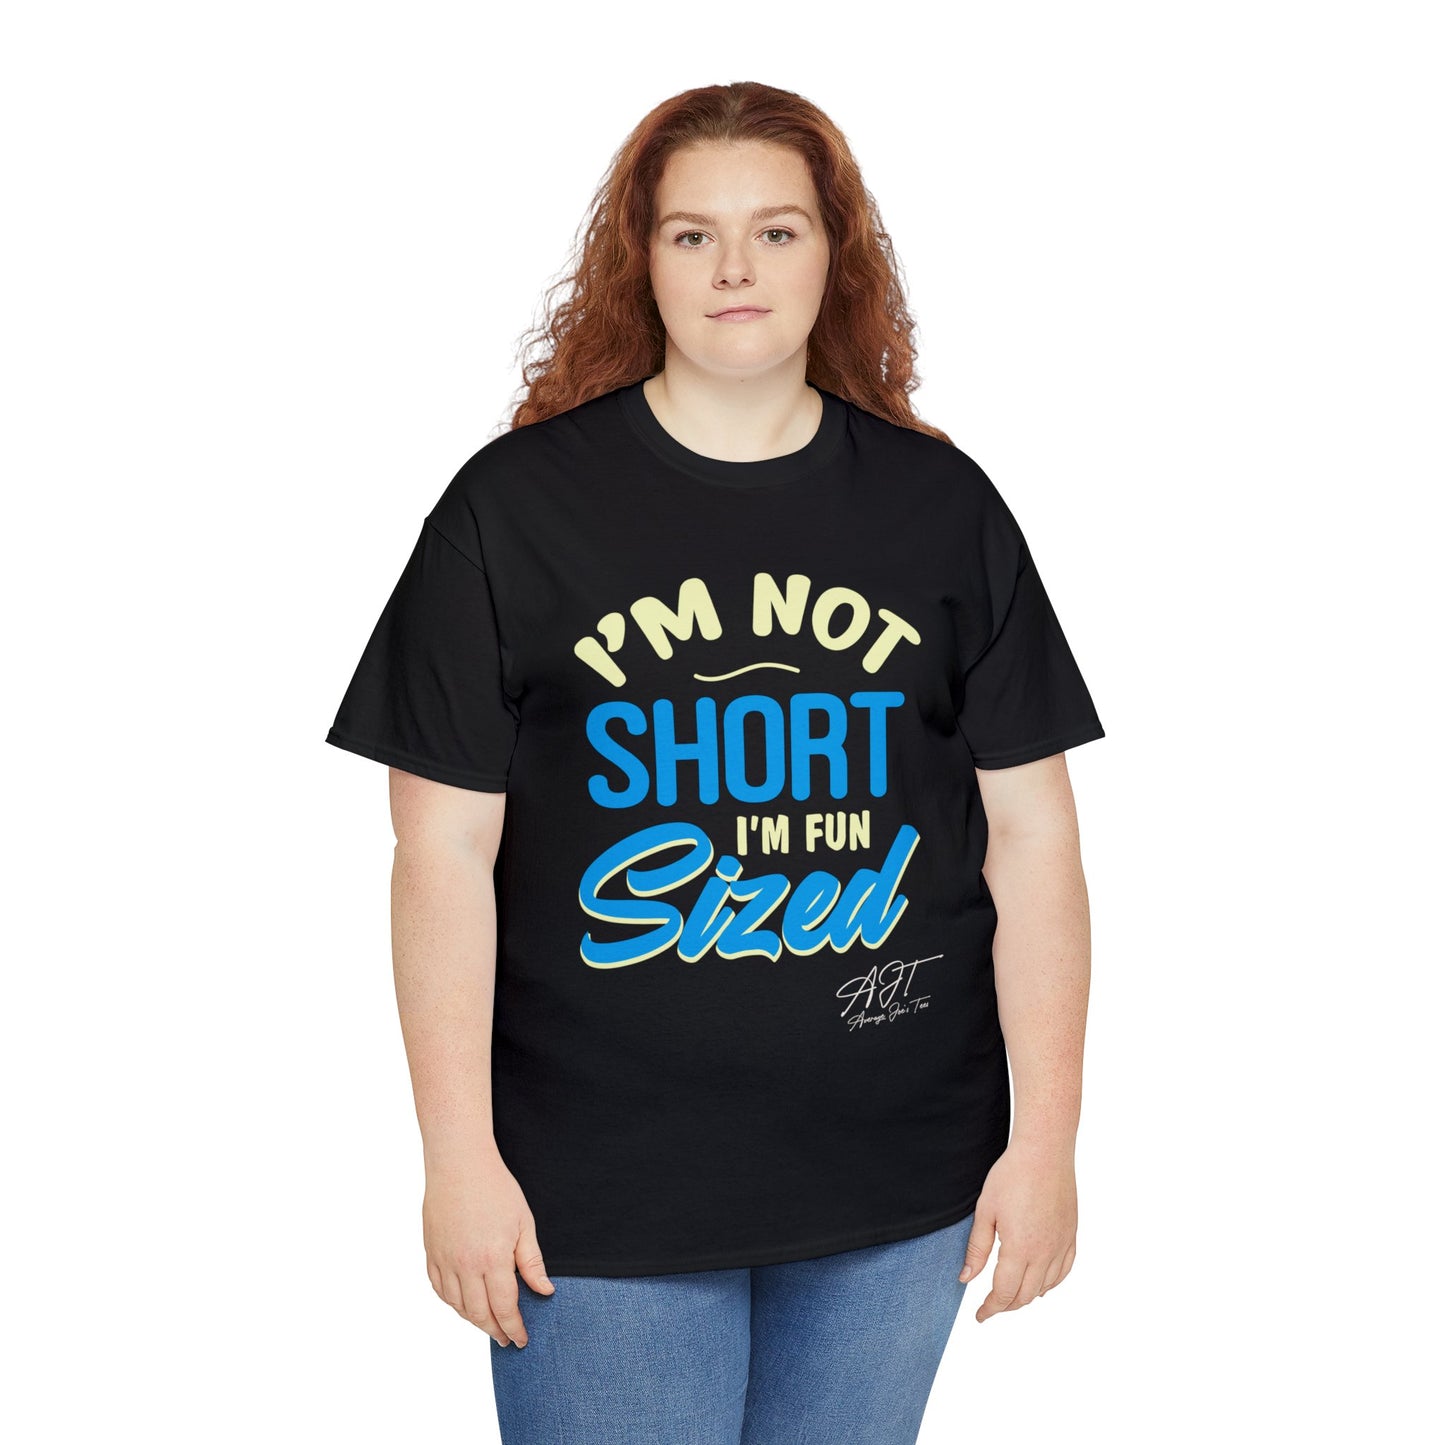 "I'm Not Short" Cotton Tee